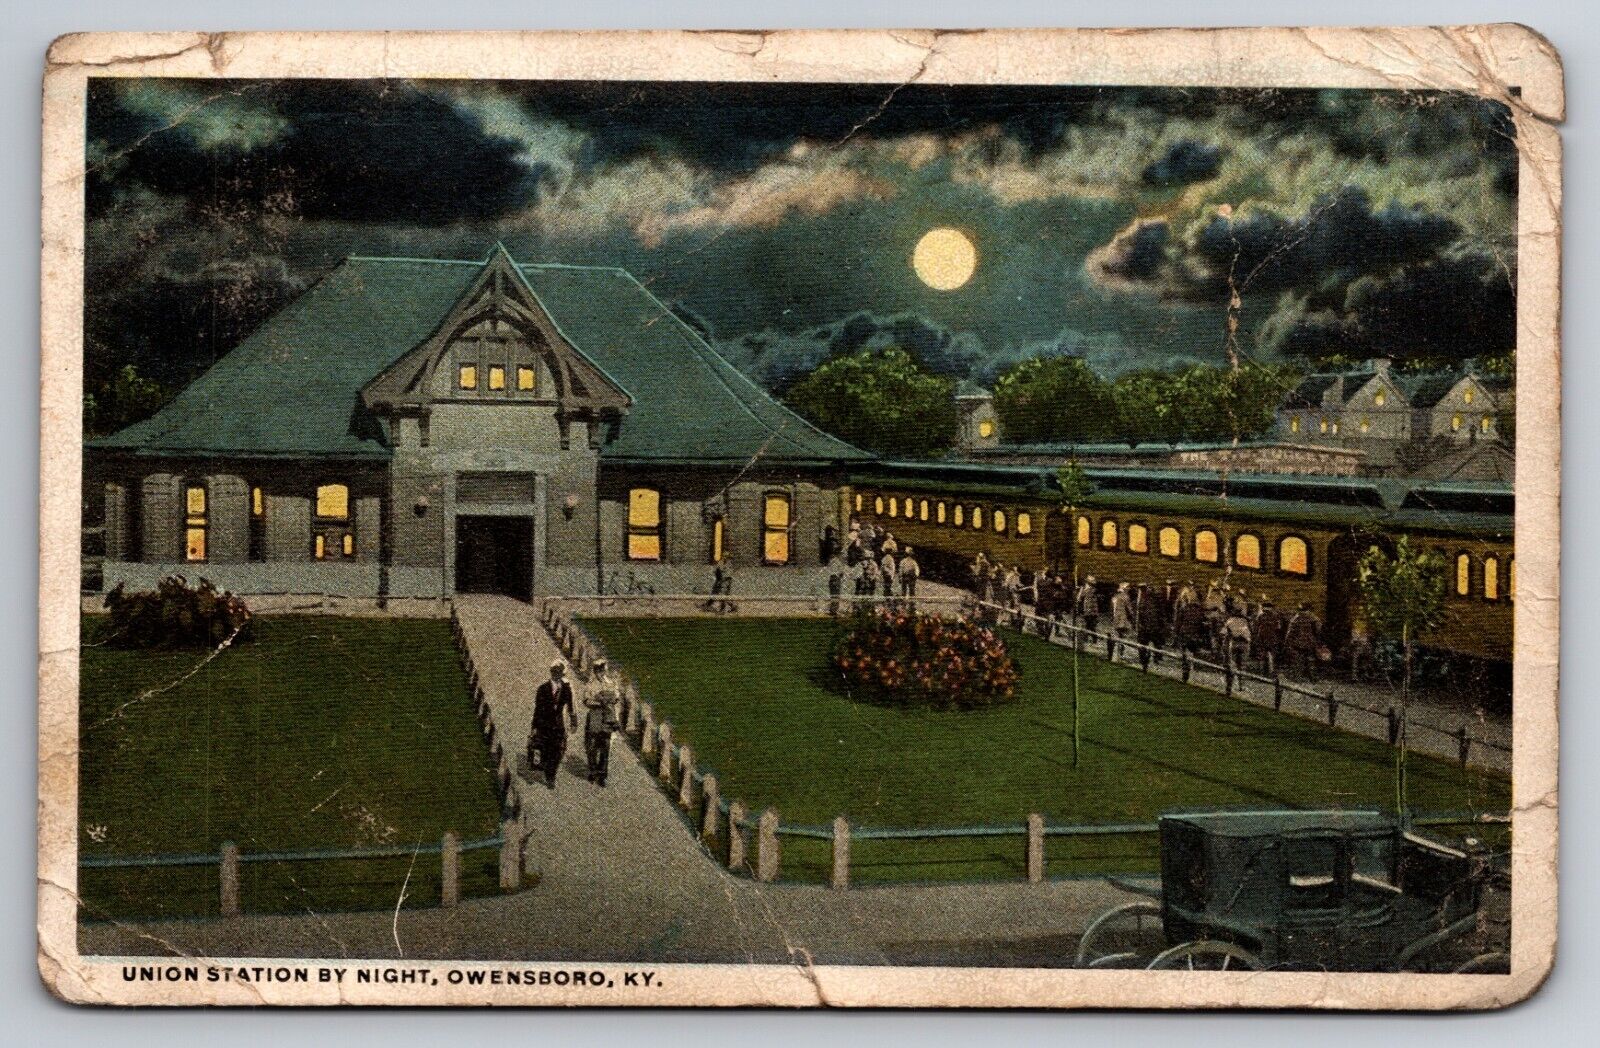 Union Station by Night Owensboro Kentucky KY Railroad Depot 1921 Postcard